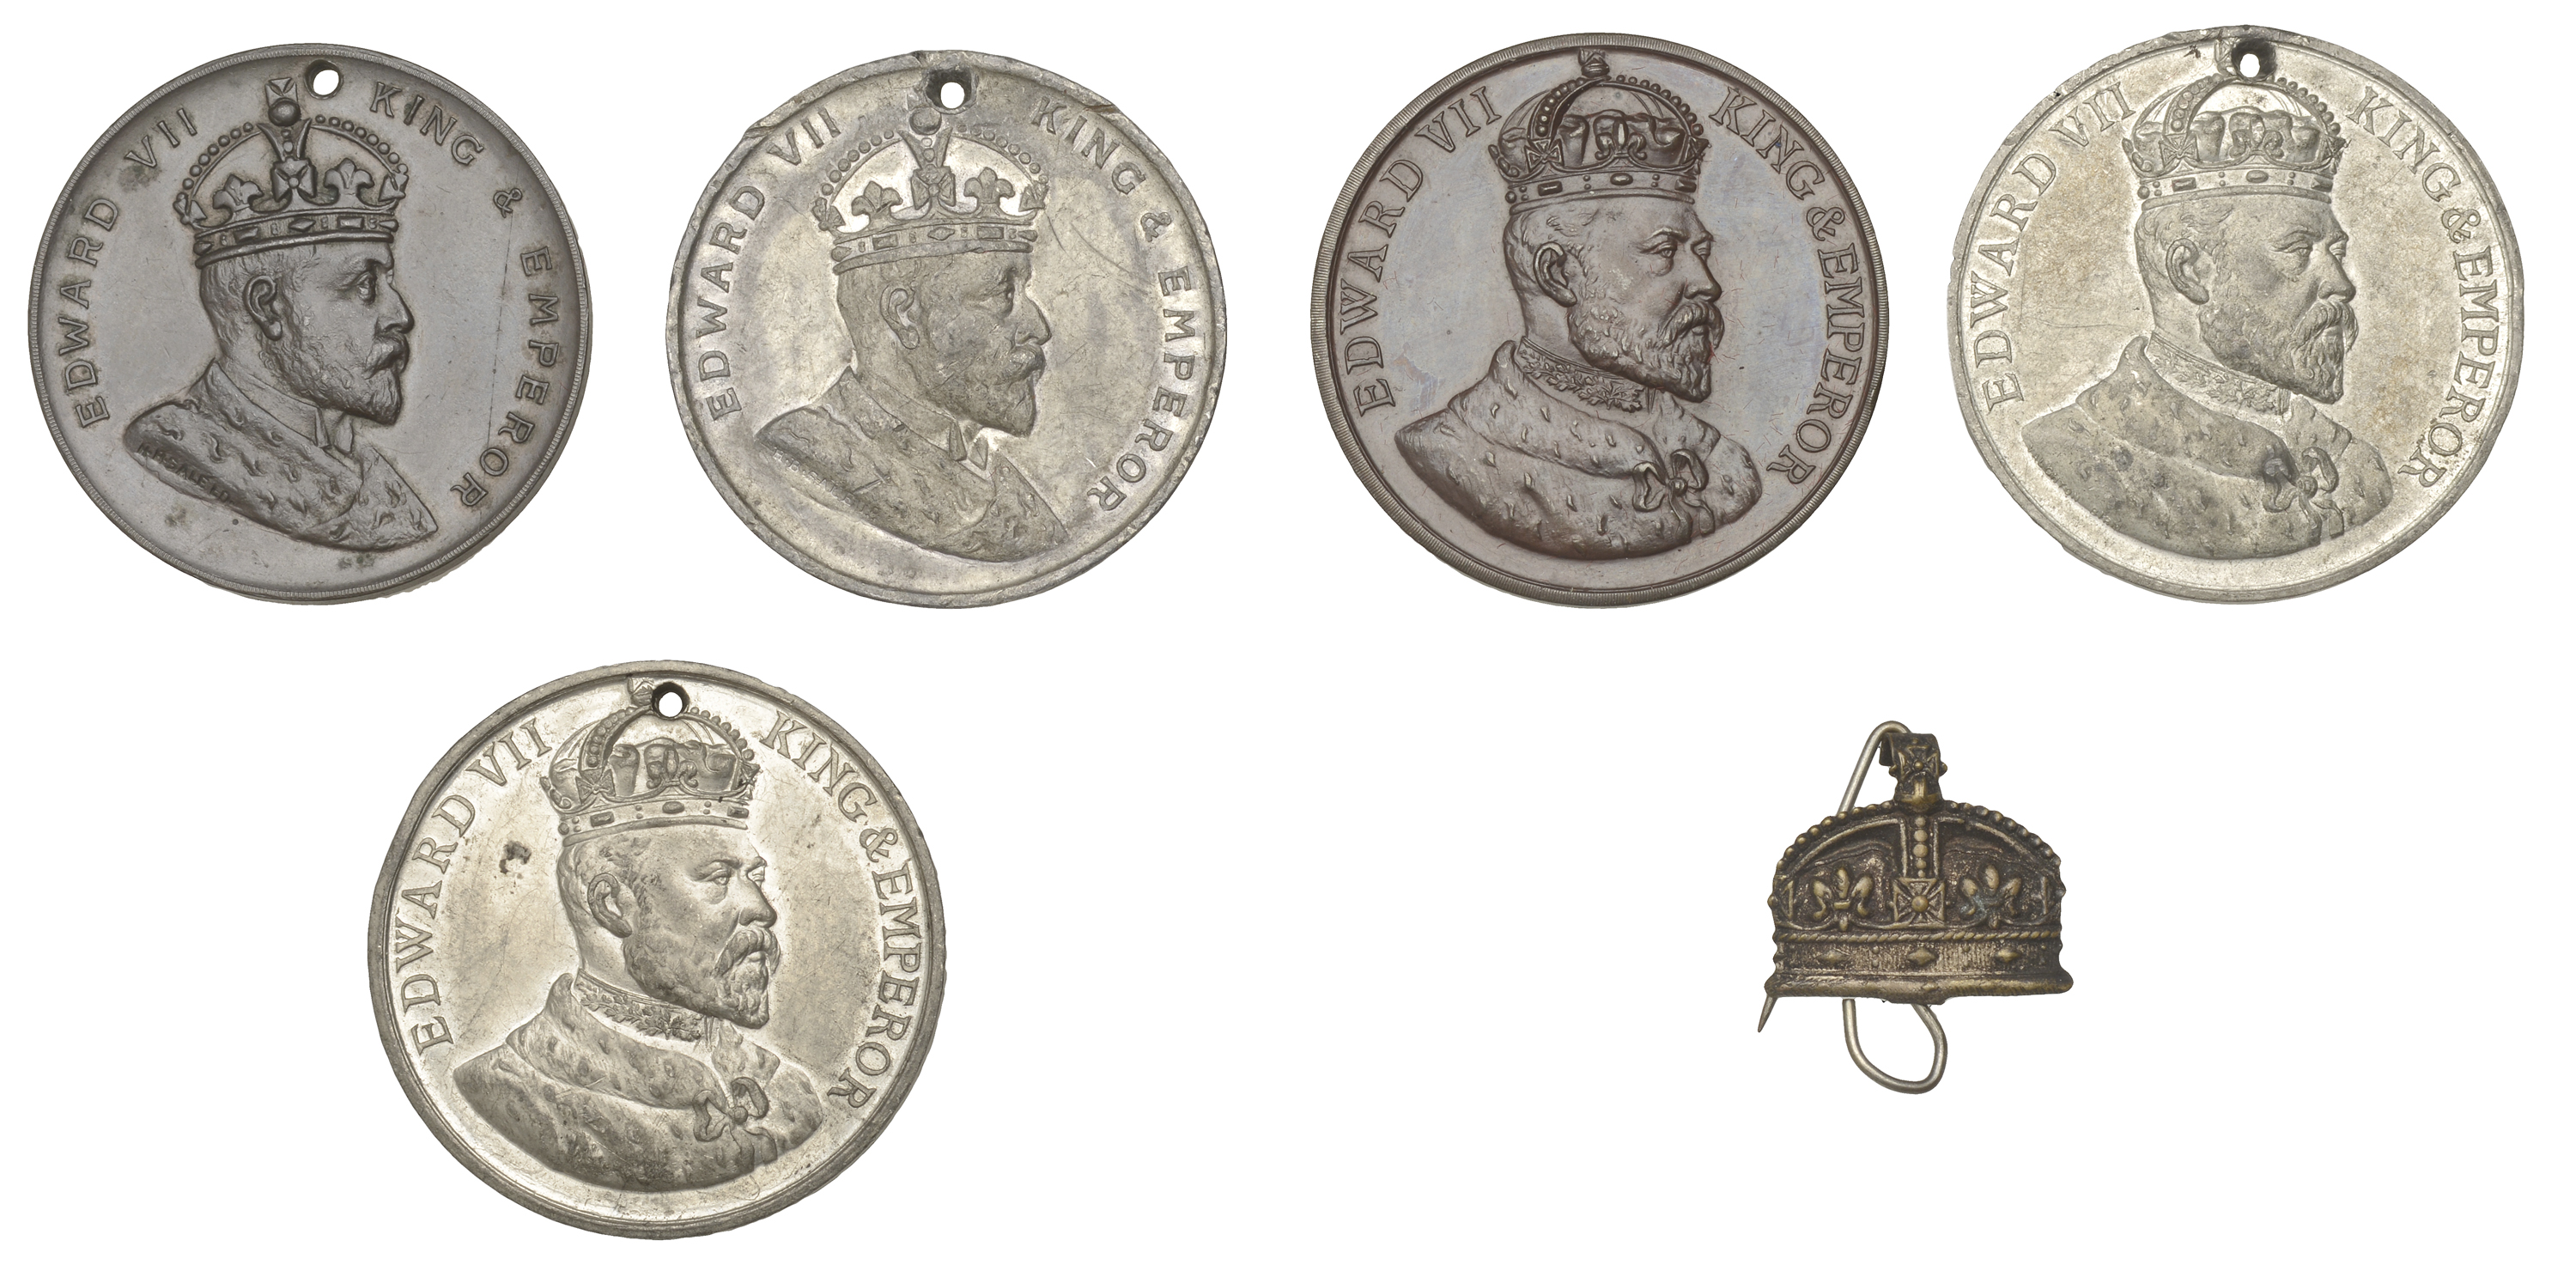 Coronation, 1902, medals (2) by H.B. Sale, white metal, 38mm (C & W 4548A.4), Tonbridge, whi...